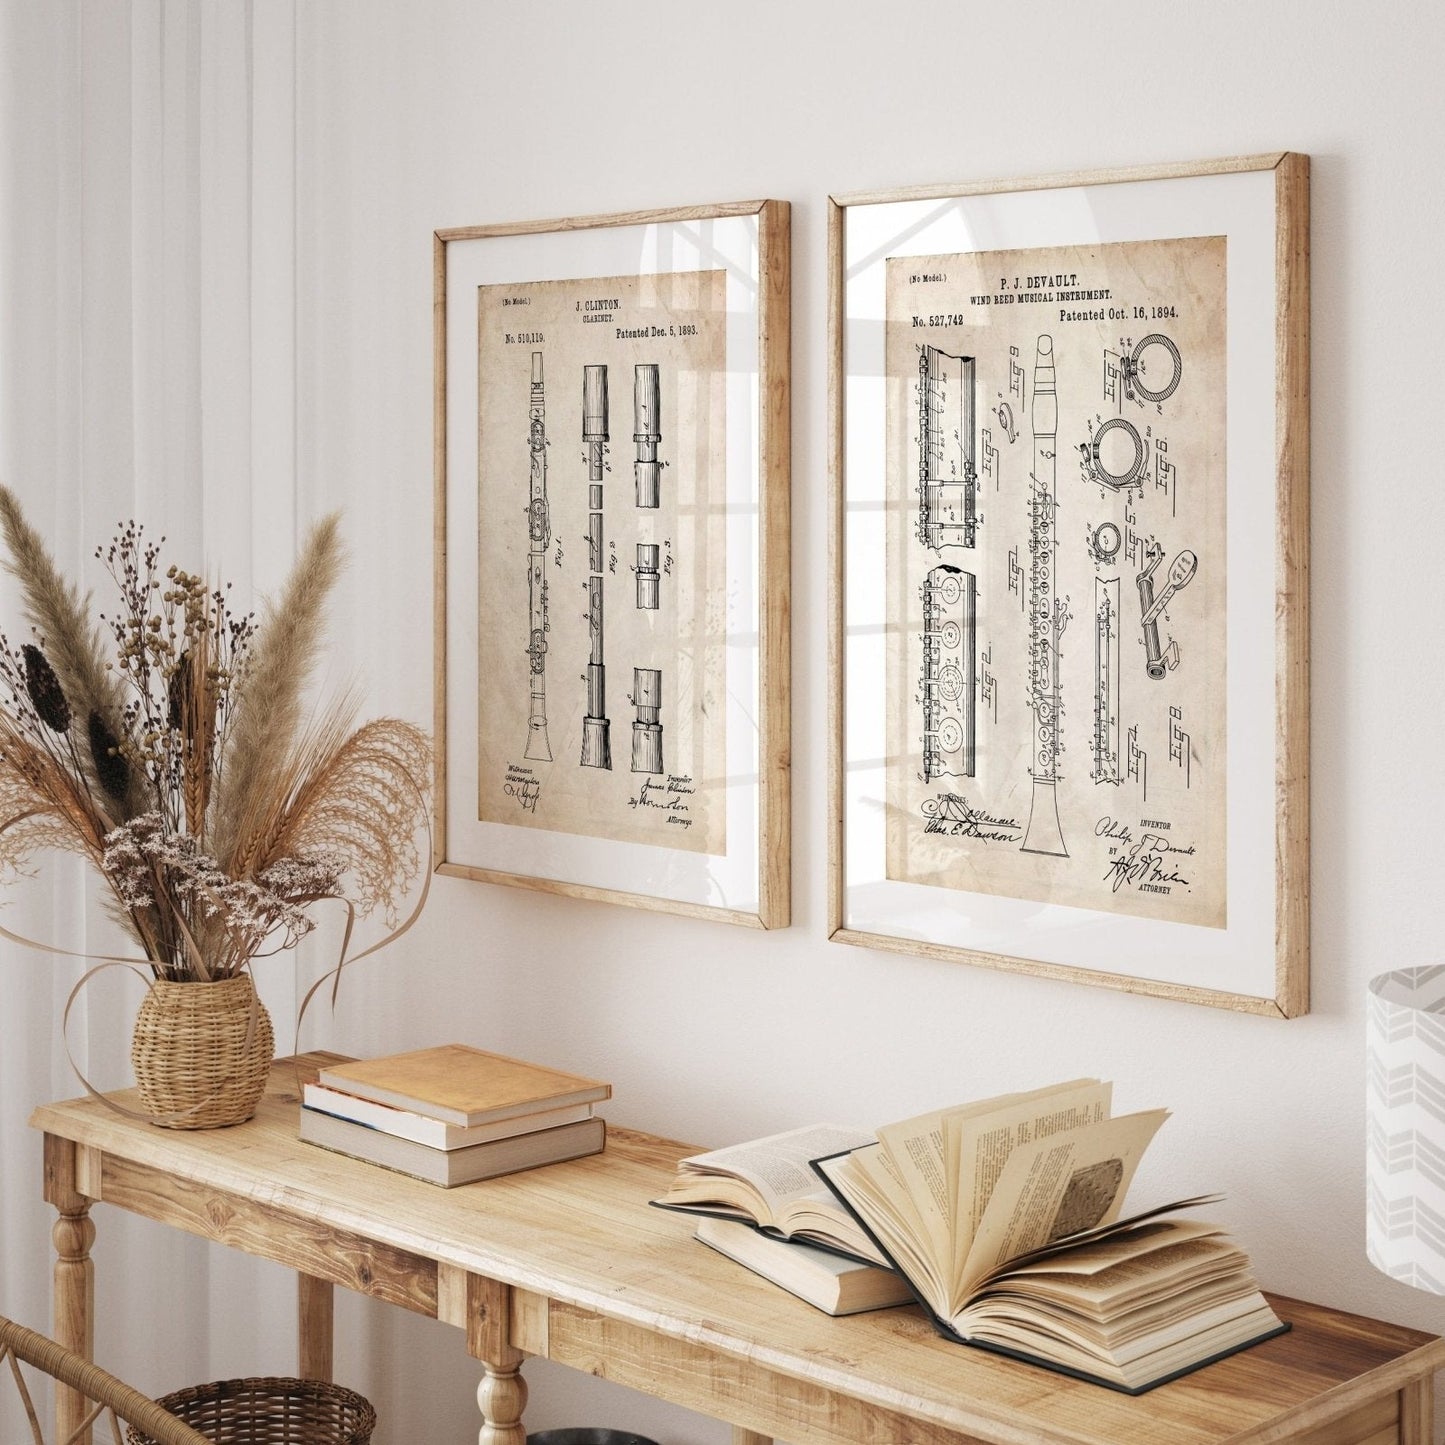 Clarinet Set Of 2 Patent Prints - Magic Posters